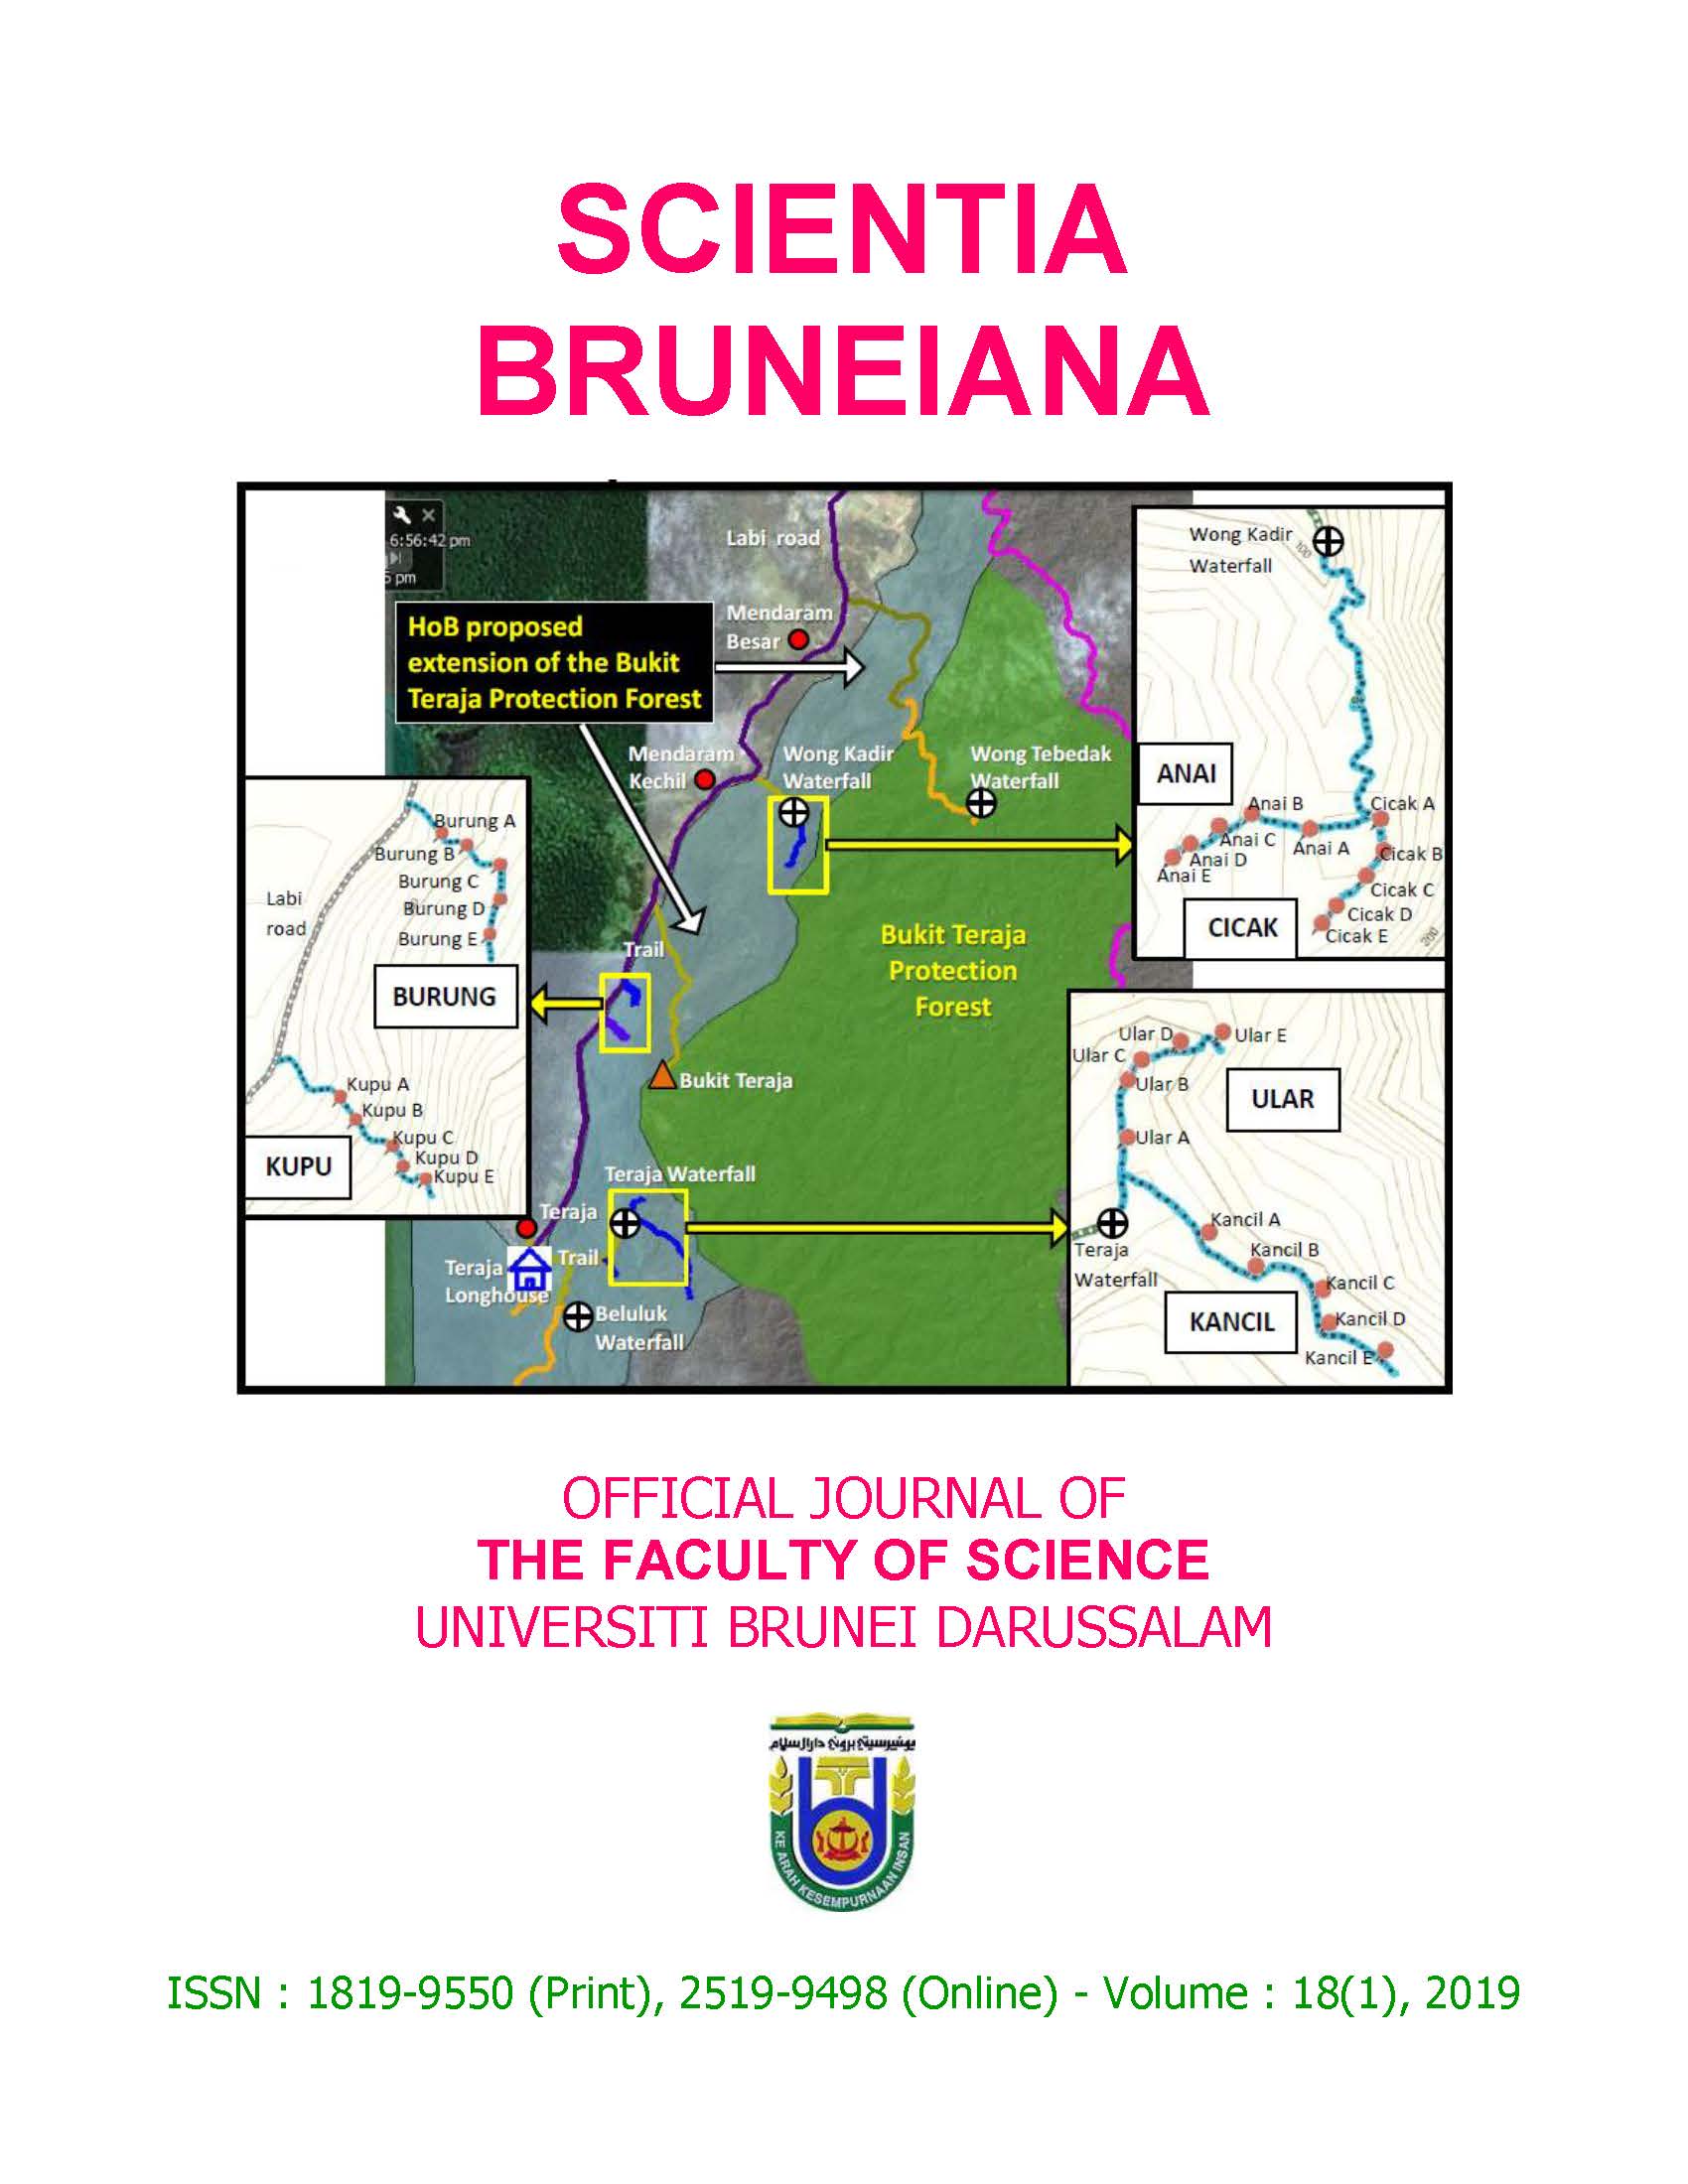 Scientia Bruneiana